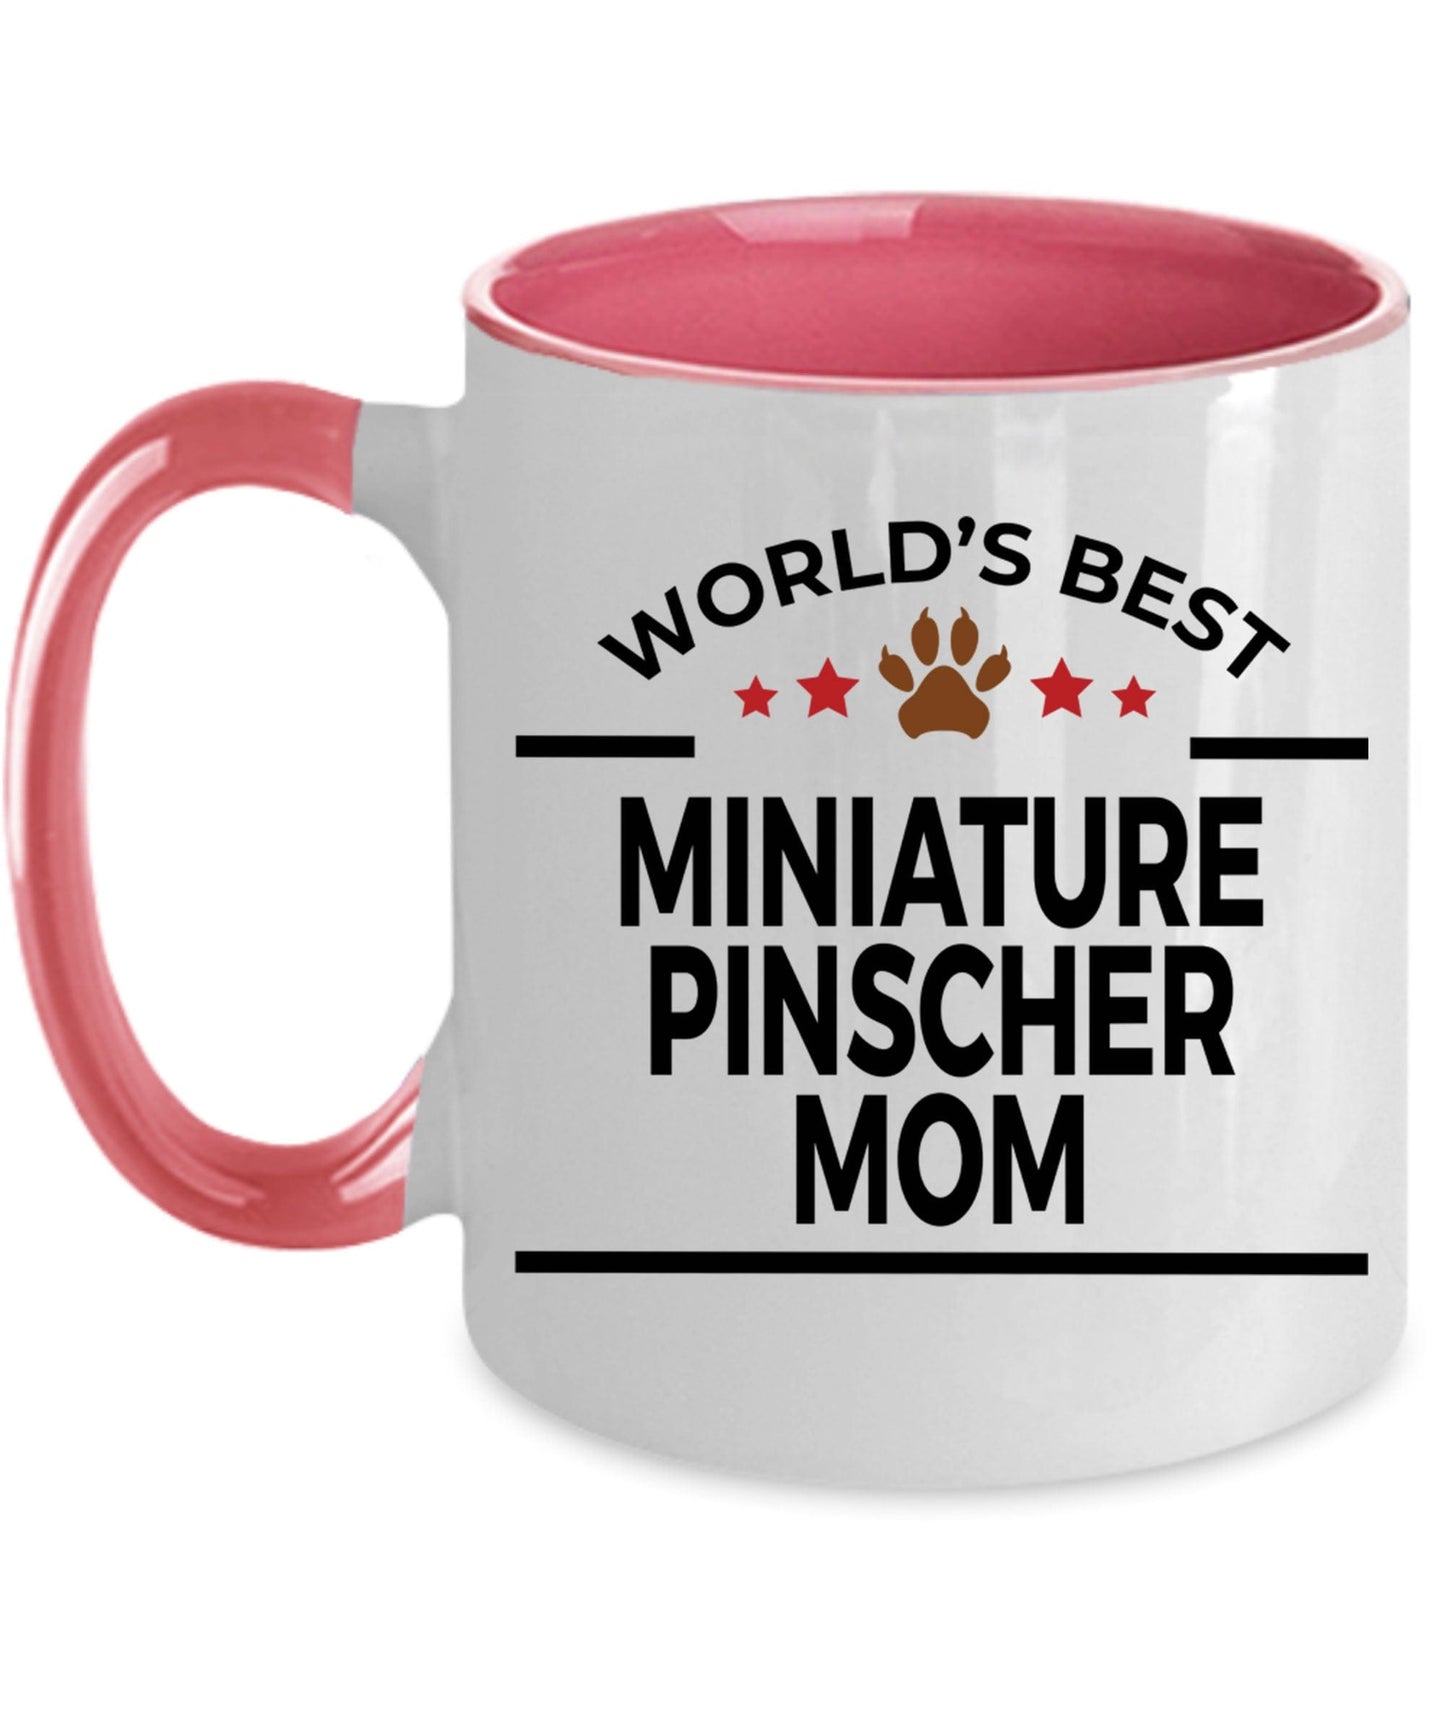 Miniature Pinscher Dog Mom Coffee Mug